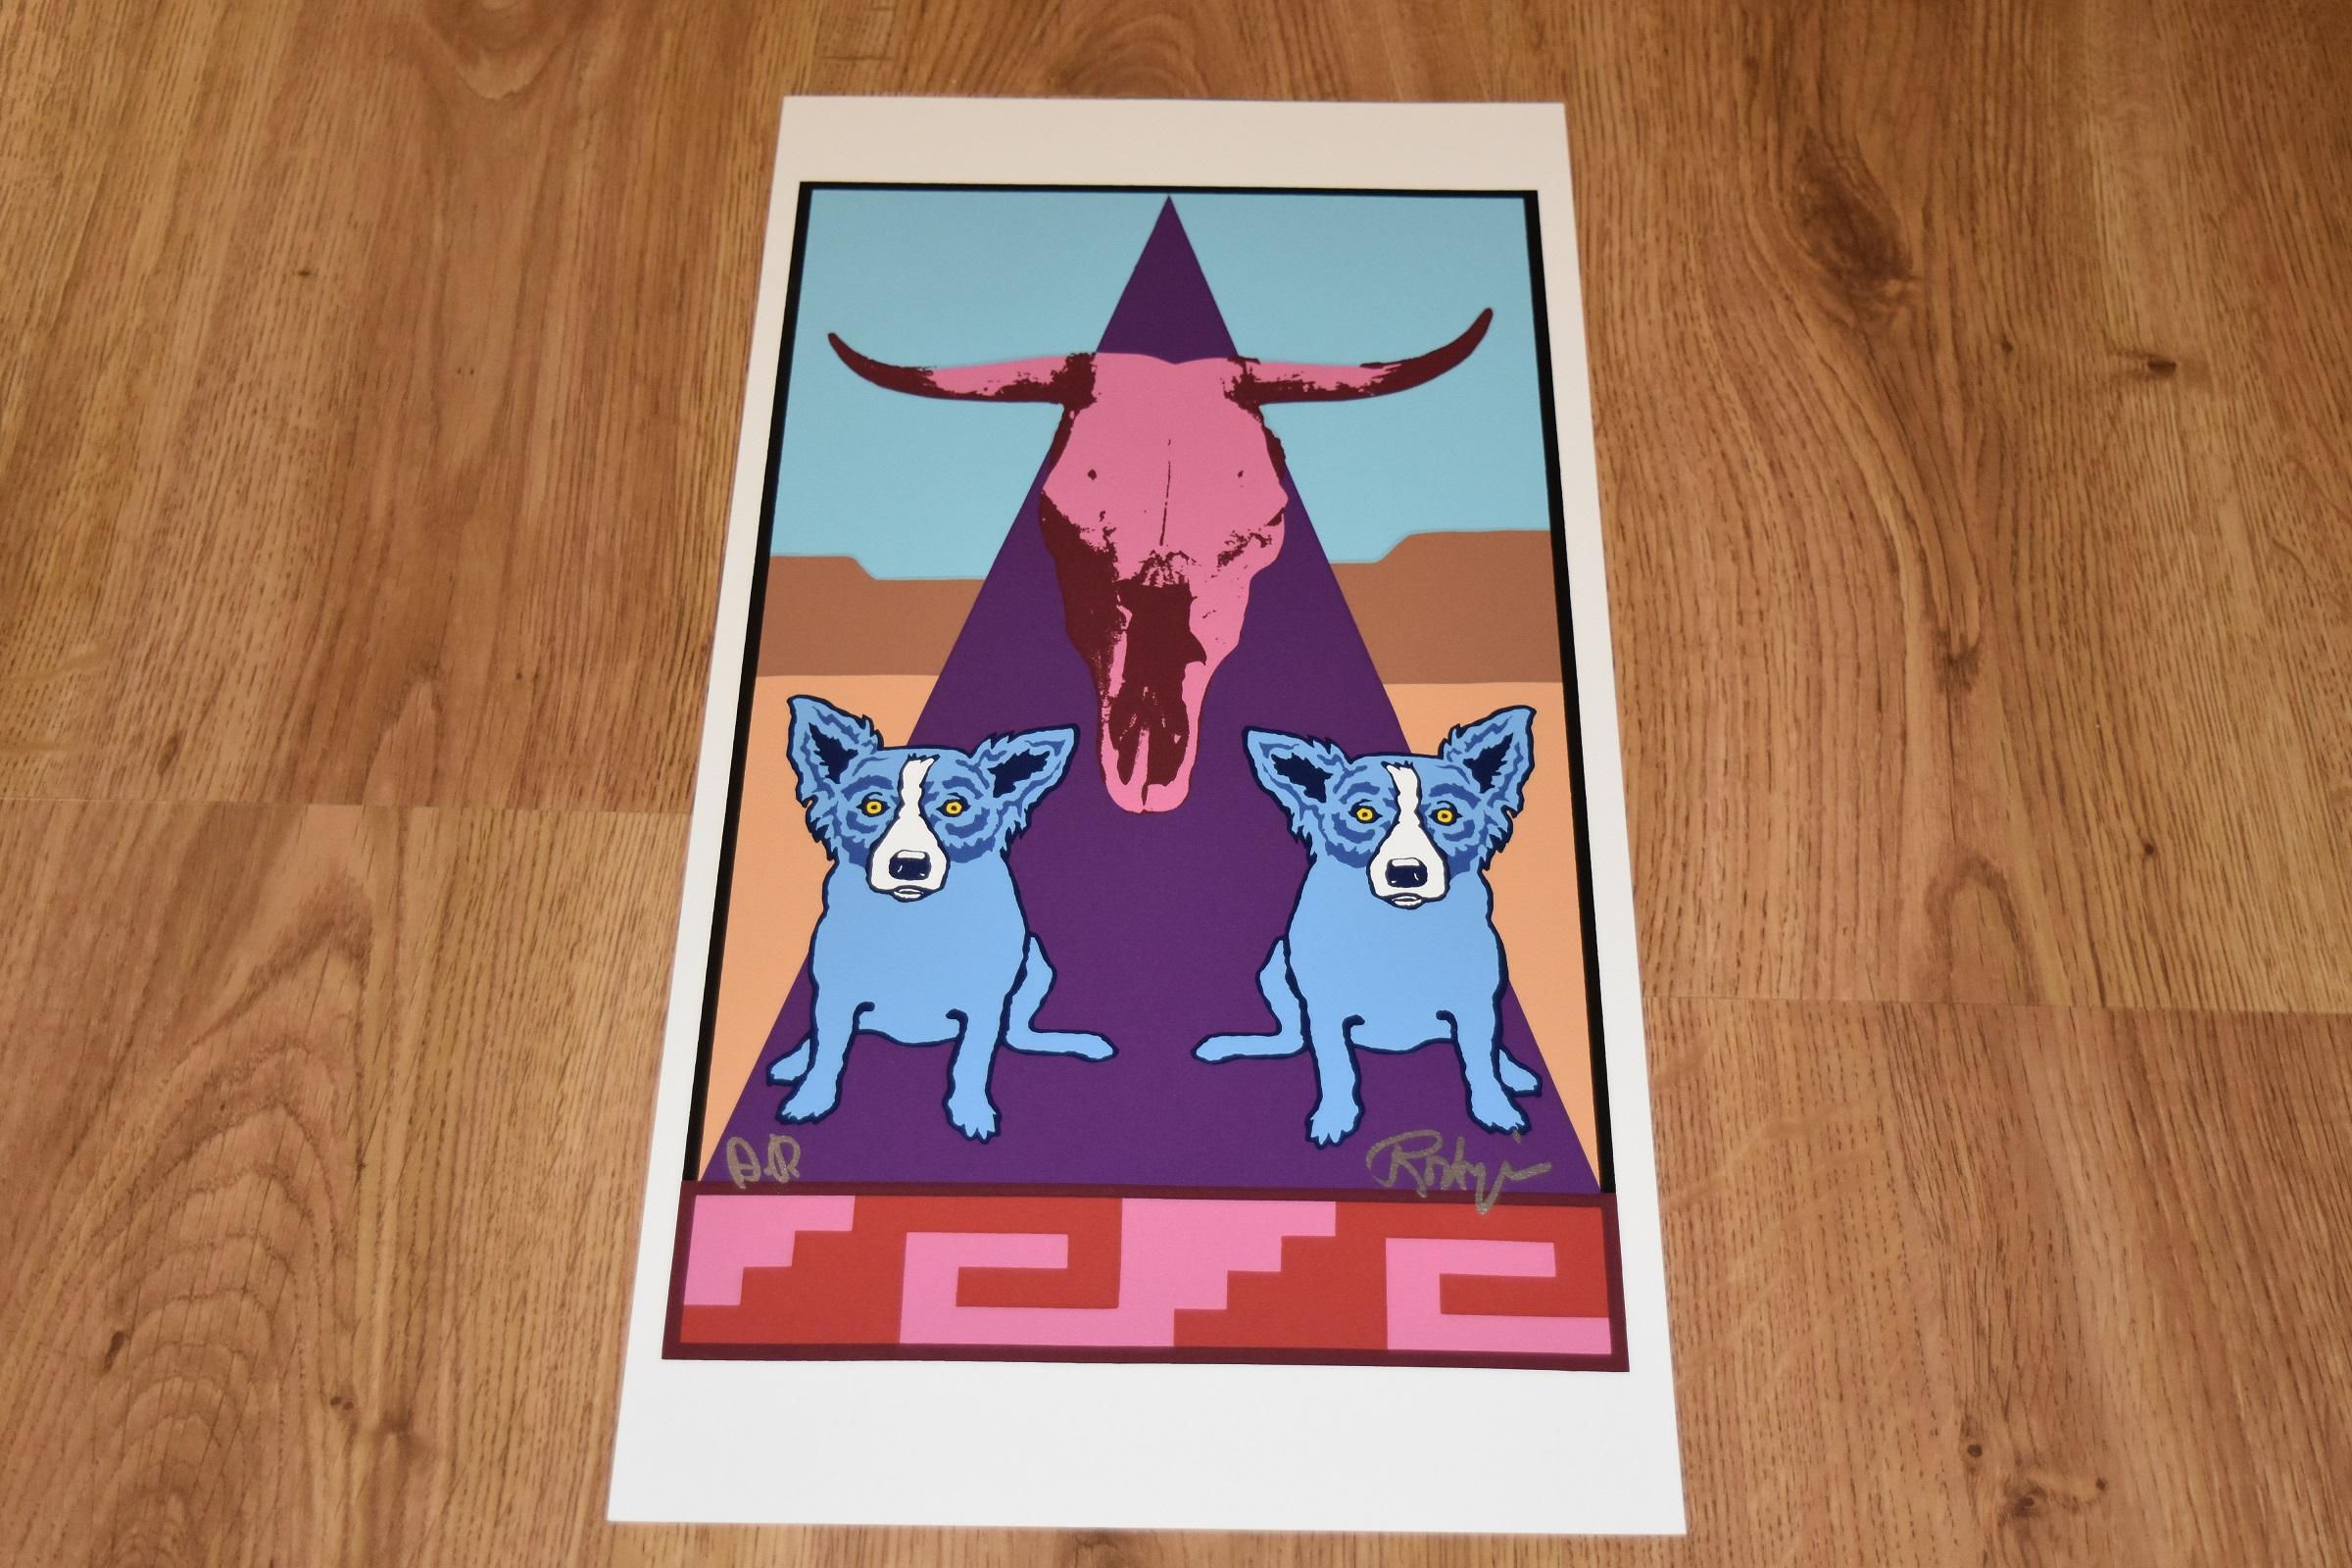 Artist:  George Rodrigue
Title:  Blue Dog “Pueblo Puppies”
Medium:  Silkscreen 
Date:  1993
Edition:  Artist Proof
Dimensions:  21 X 12”
Description:  Signed & Unframed
Condition:  Excellent 
